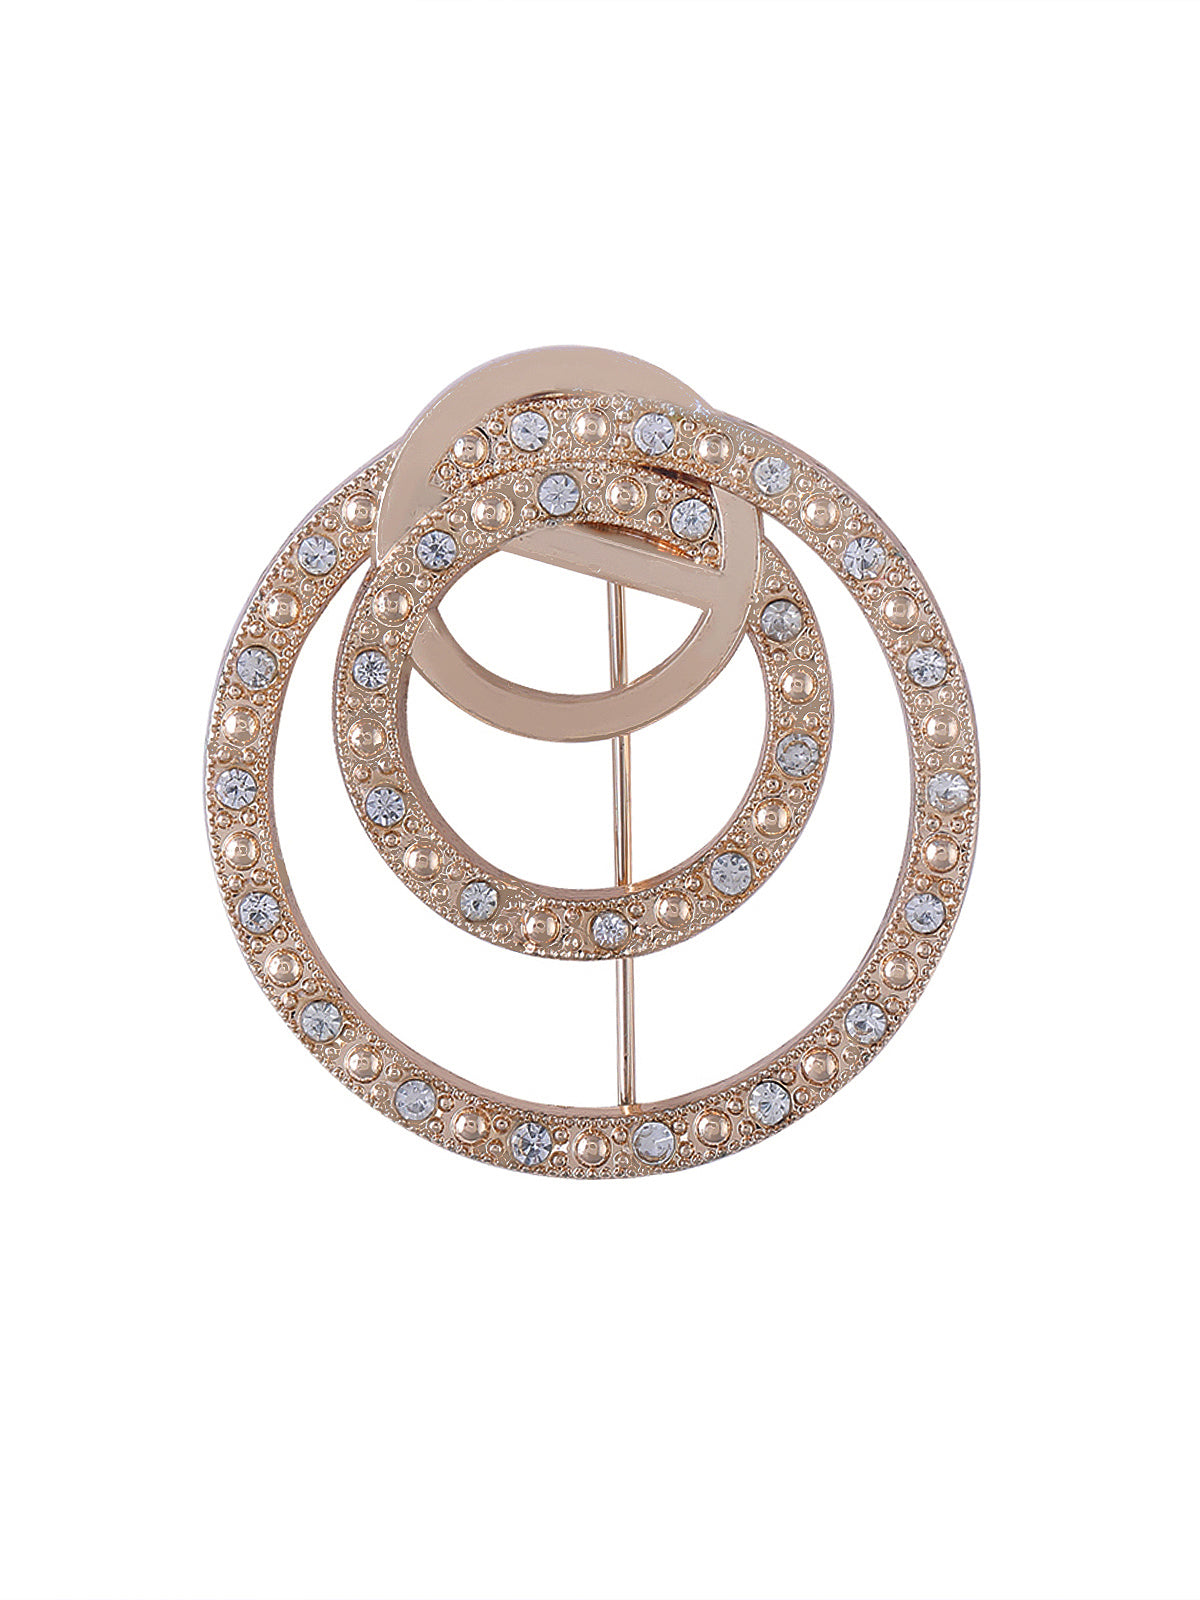 Round Shape Golden Color Ring Design Decorative Diamond Brooch Pin